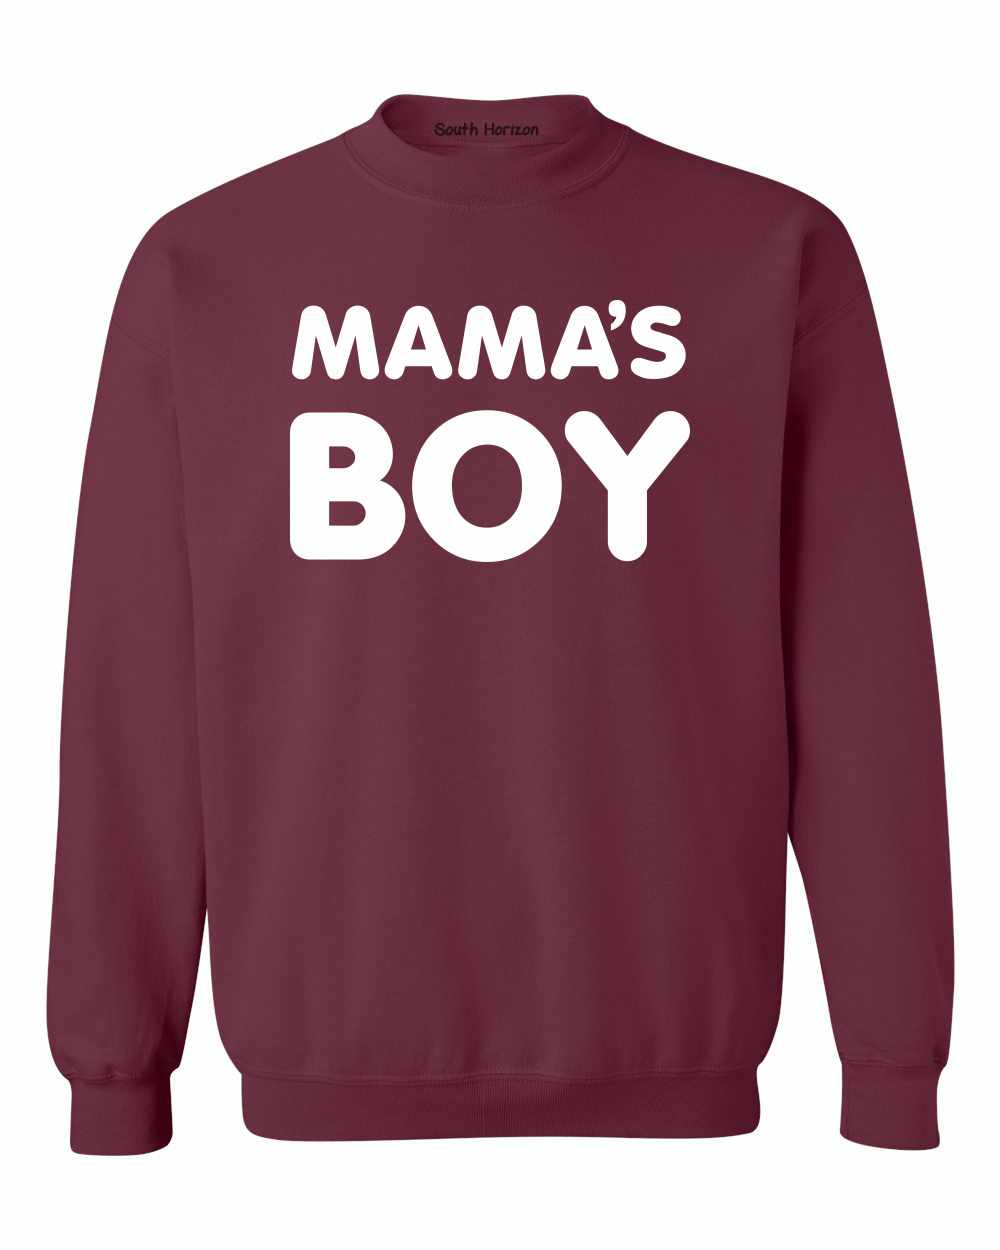 MAMA'S BOY on SweatShirt (#1185-11)